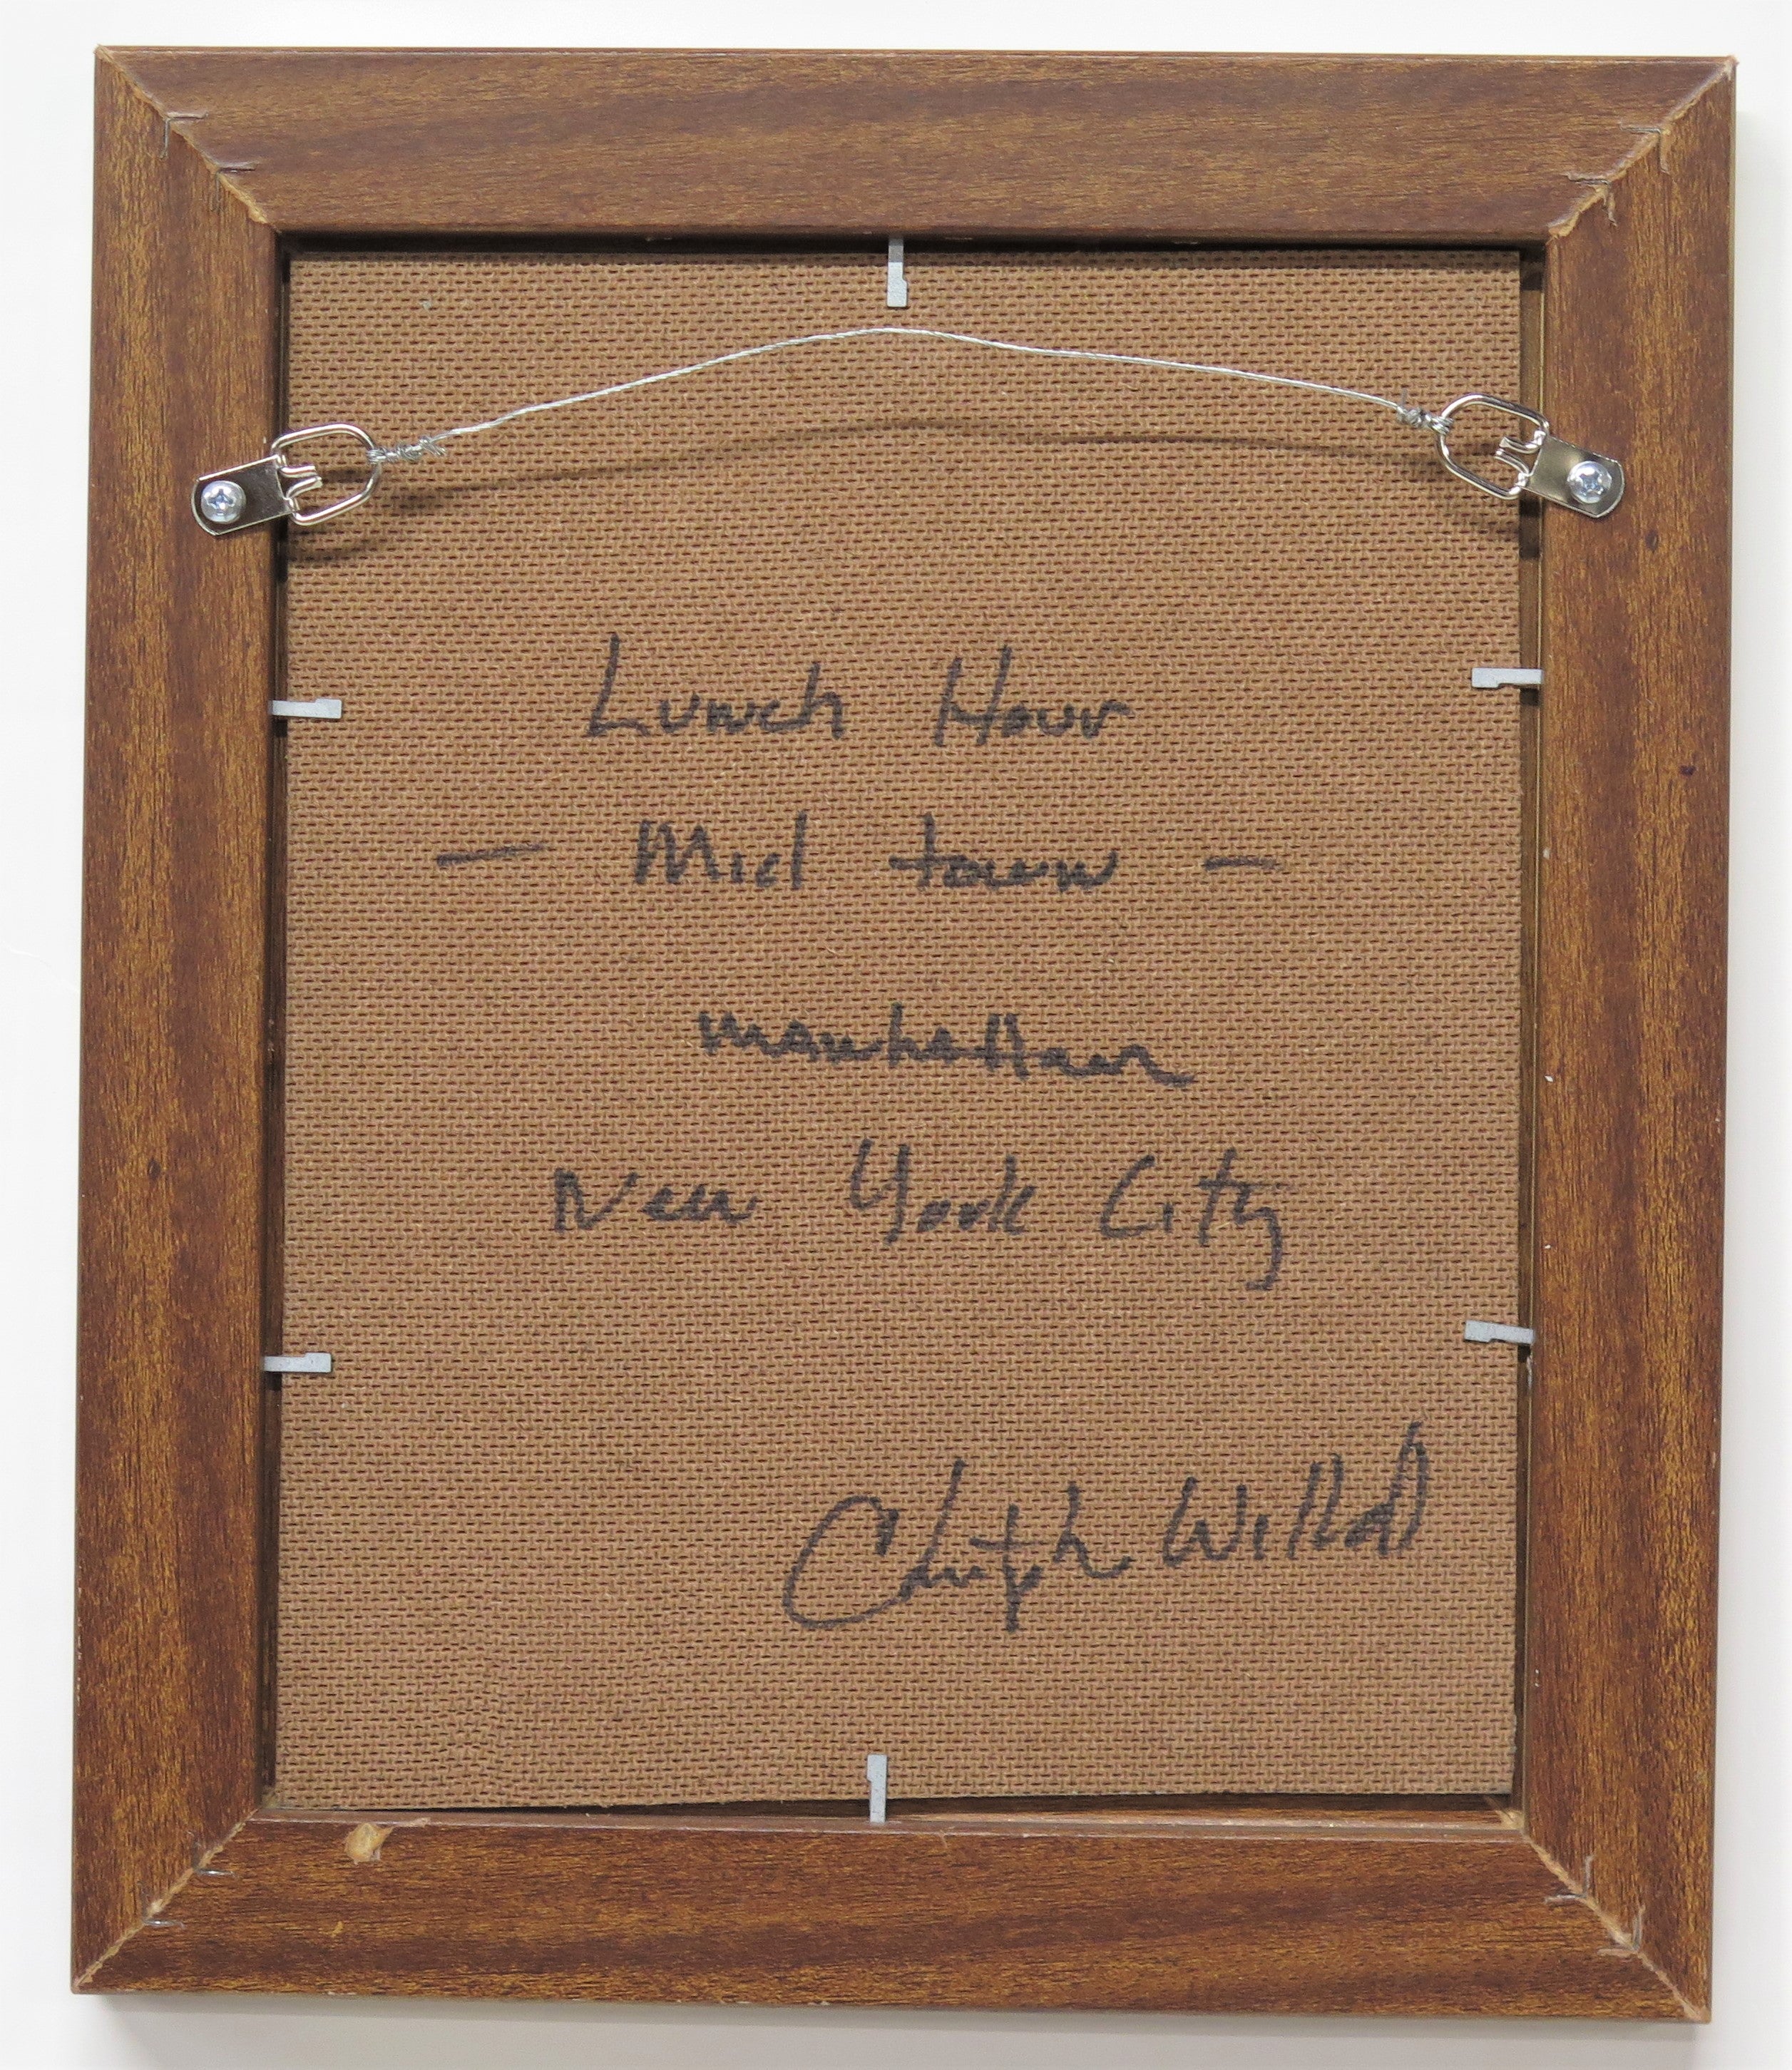 "Lunch Hour Midtown Manhattan New York City" by Christopher Willett (1959- )